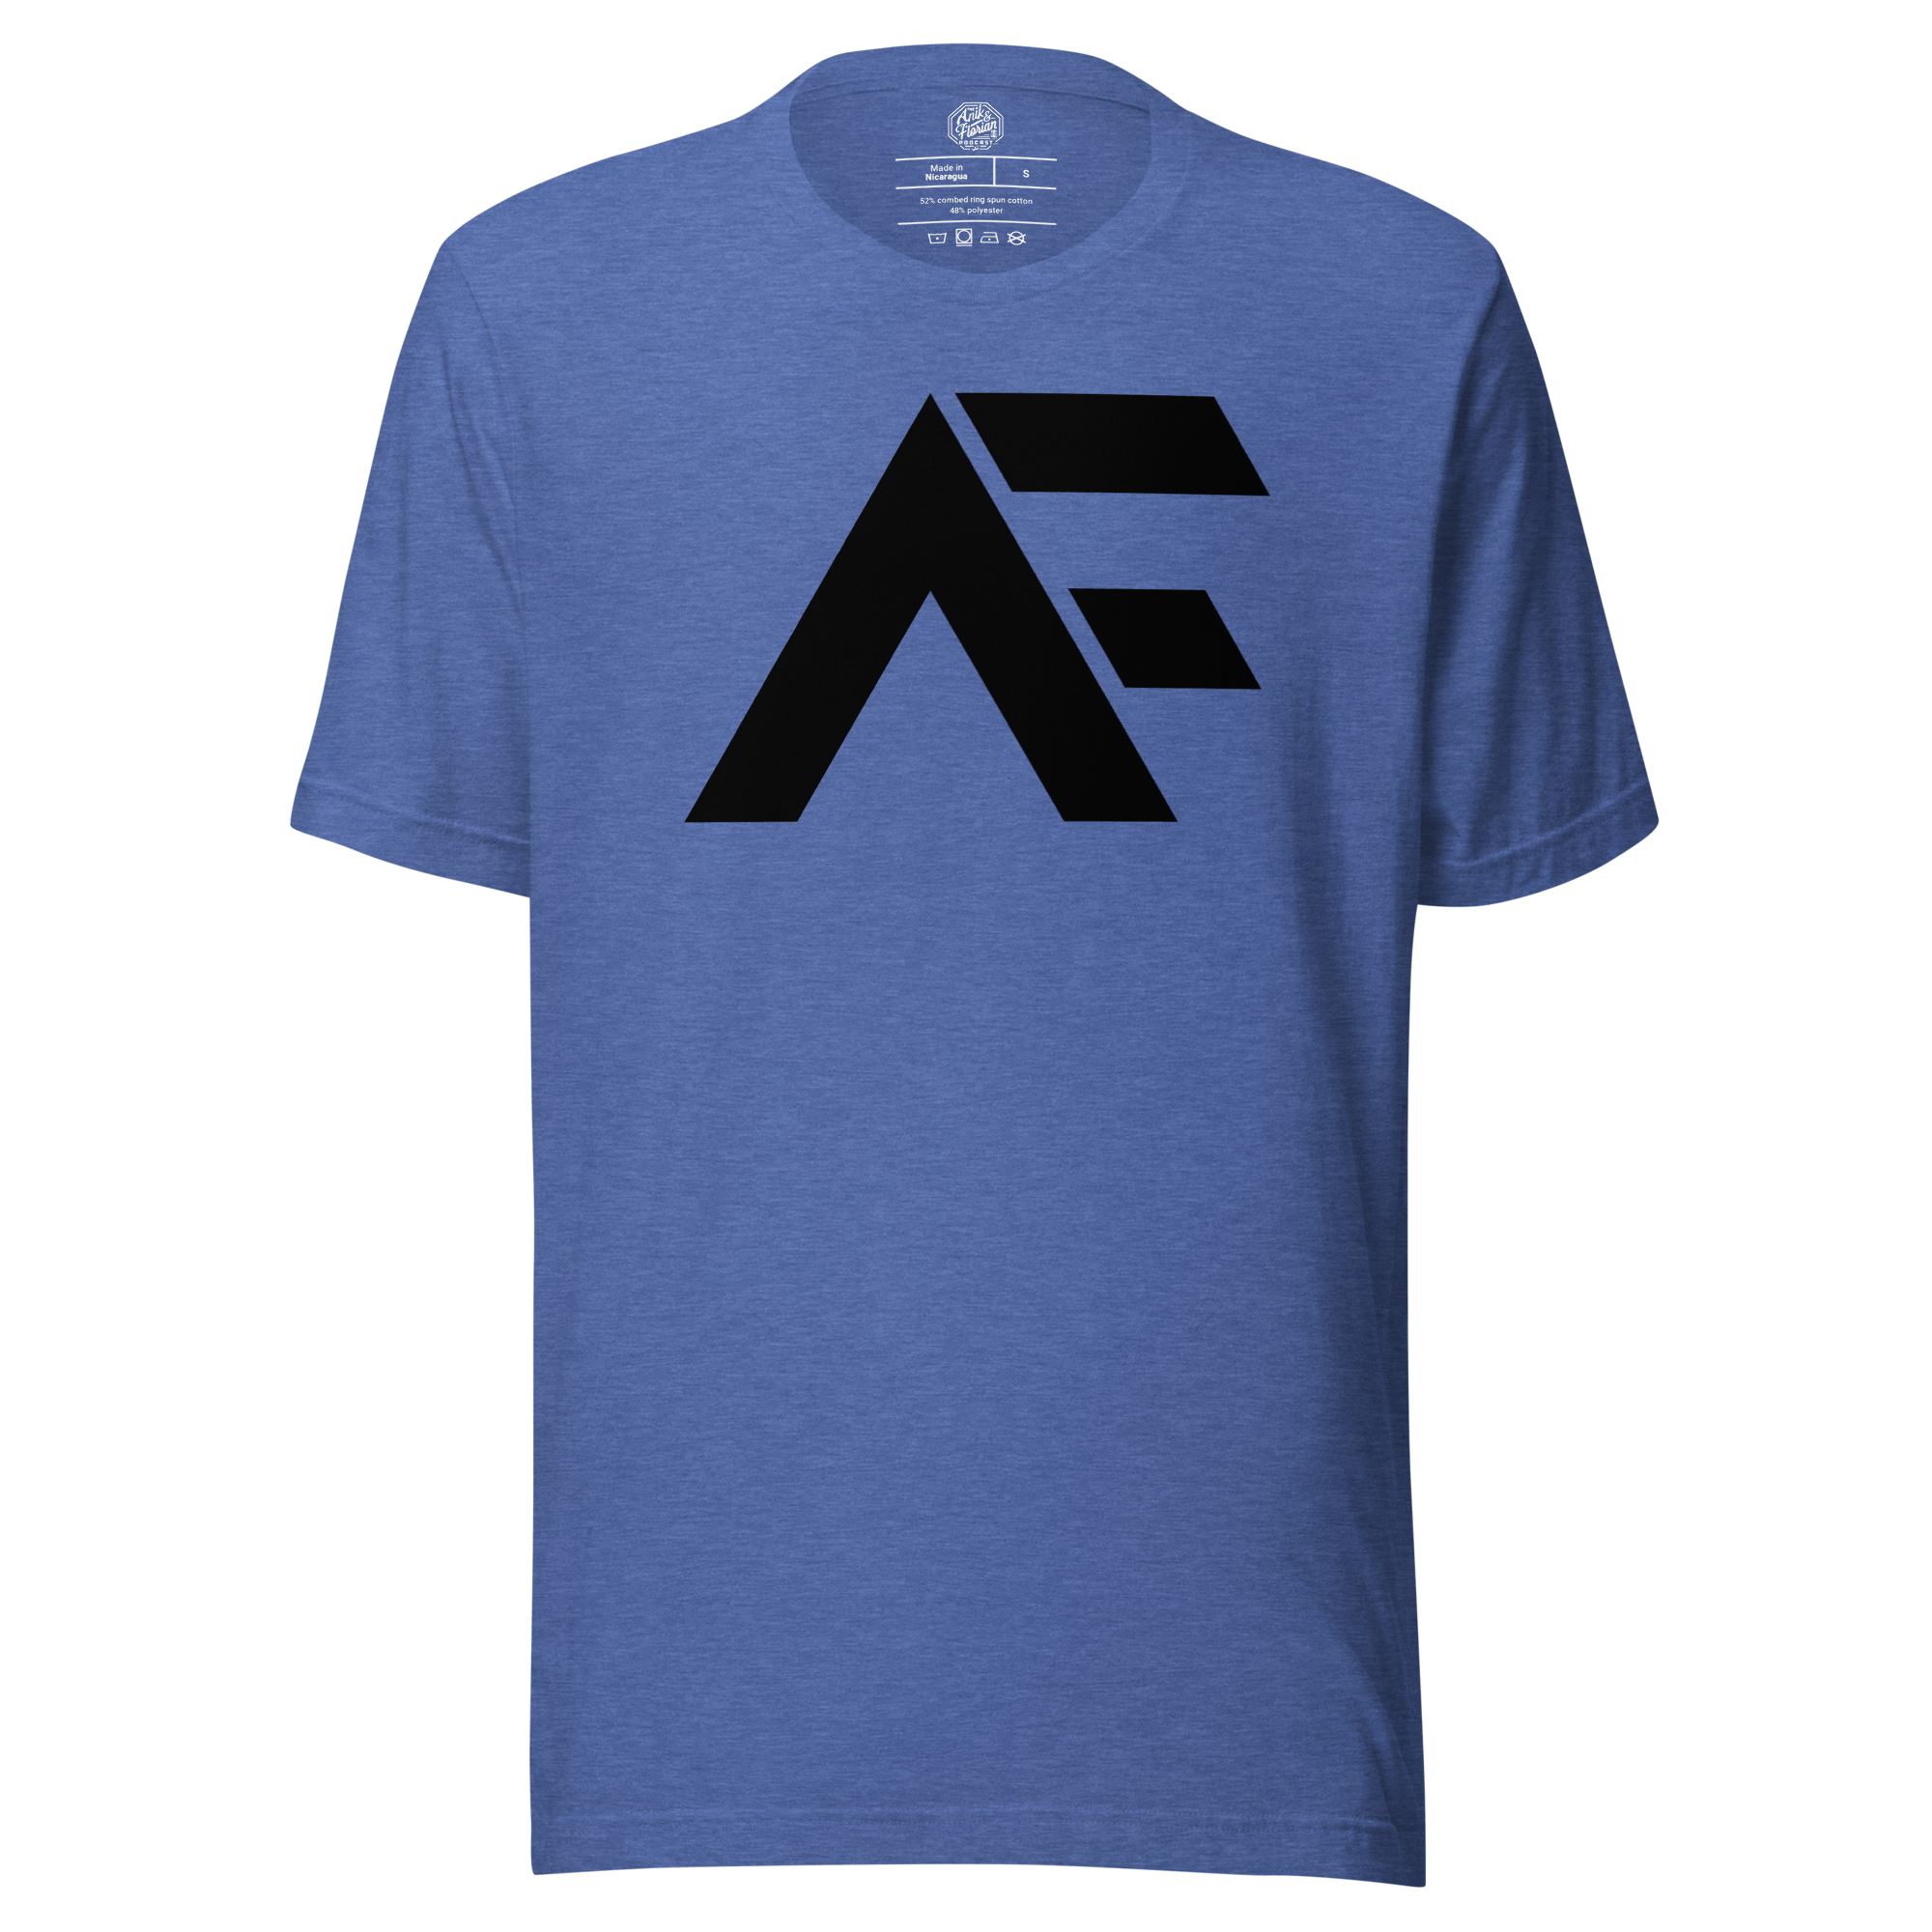 Jon Anik & Kenny Florian UFC Podcast presented by Draft Kings AF Monogram Black T-Shirt in Heather True Royal Blue